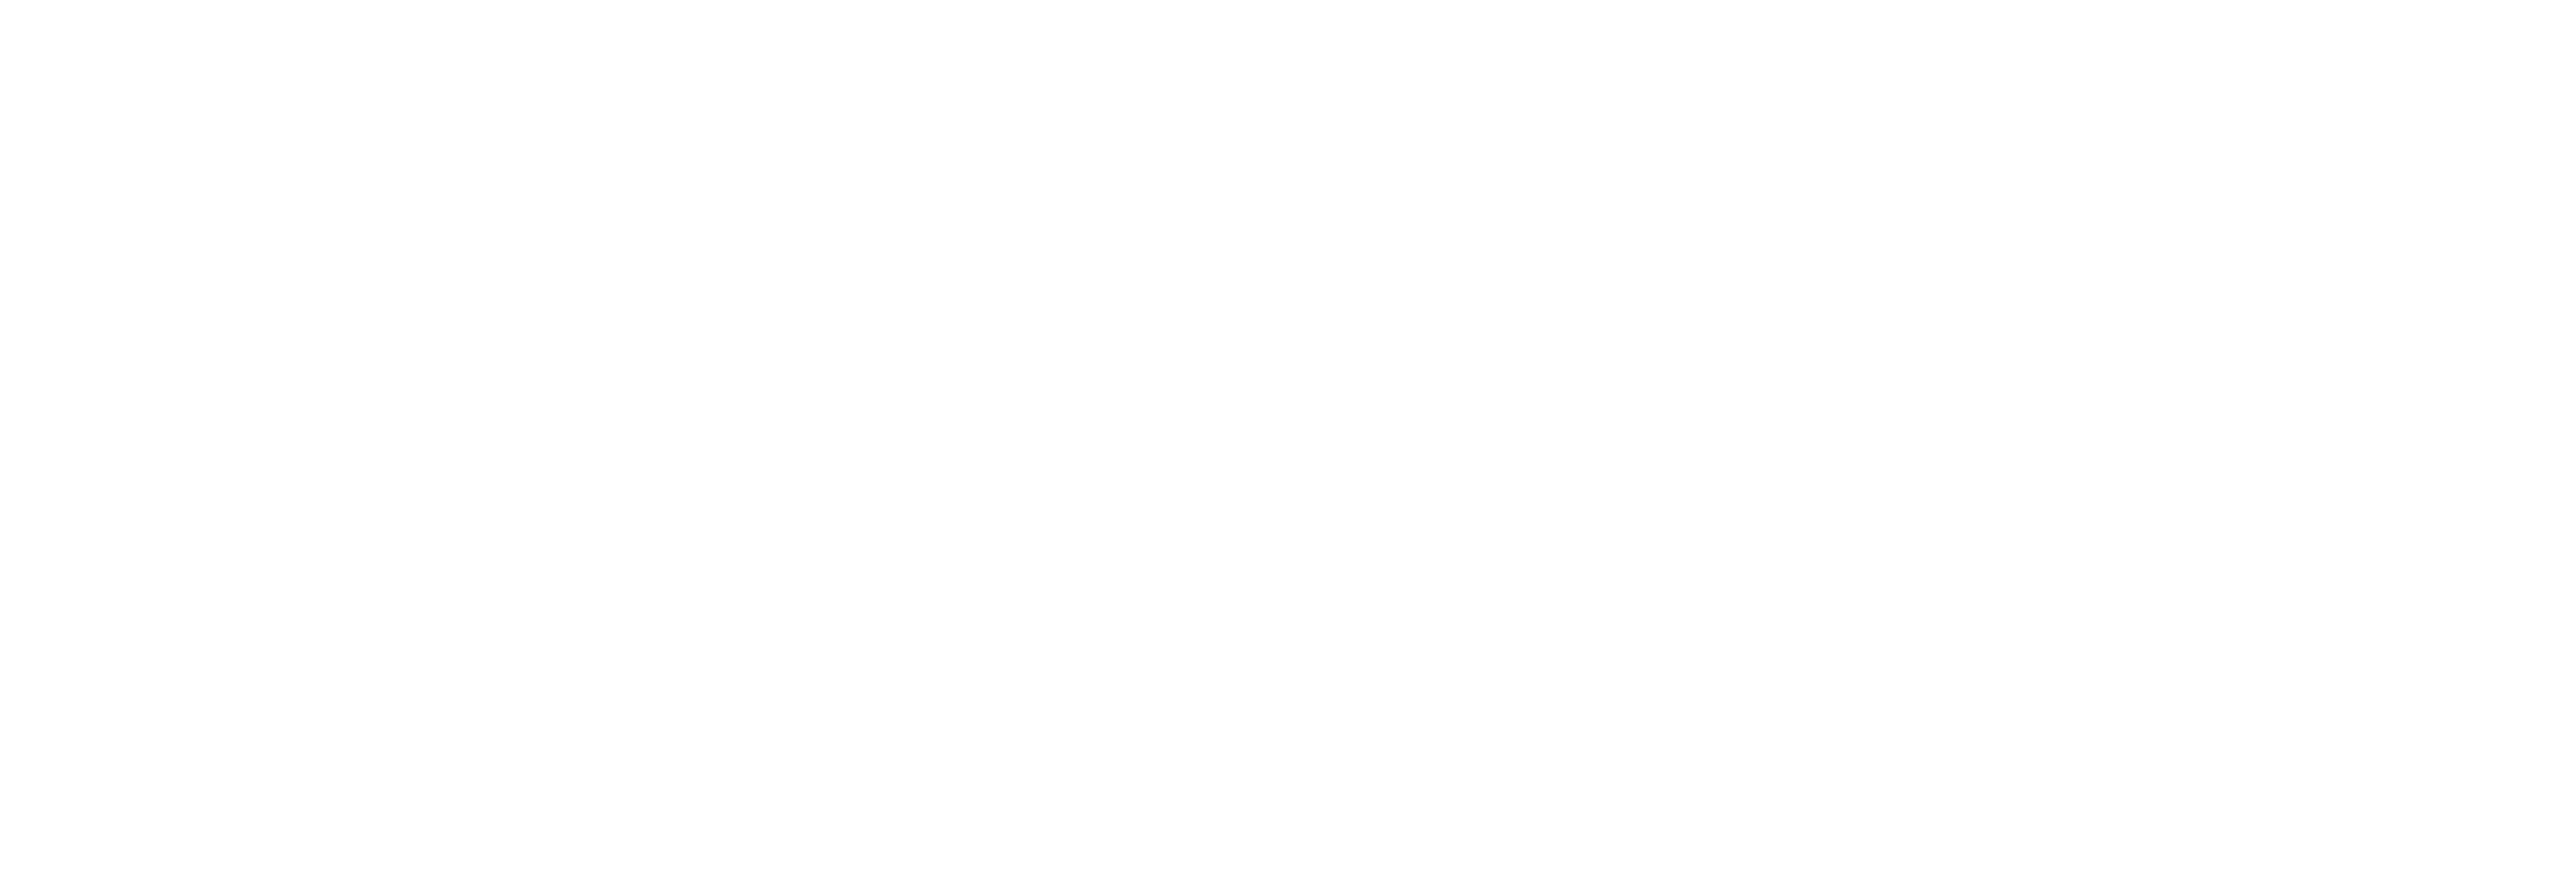 The Wheelhouse blog logo